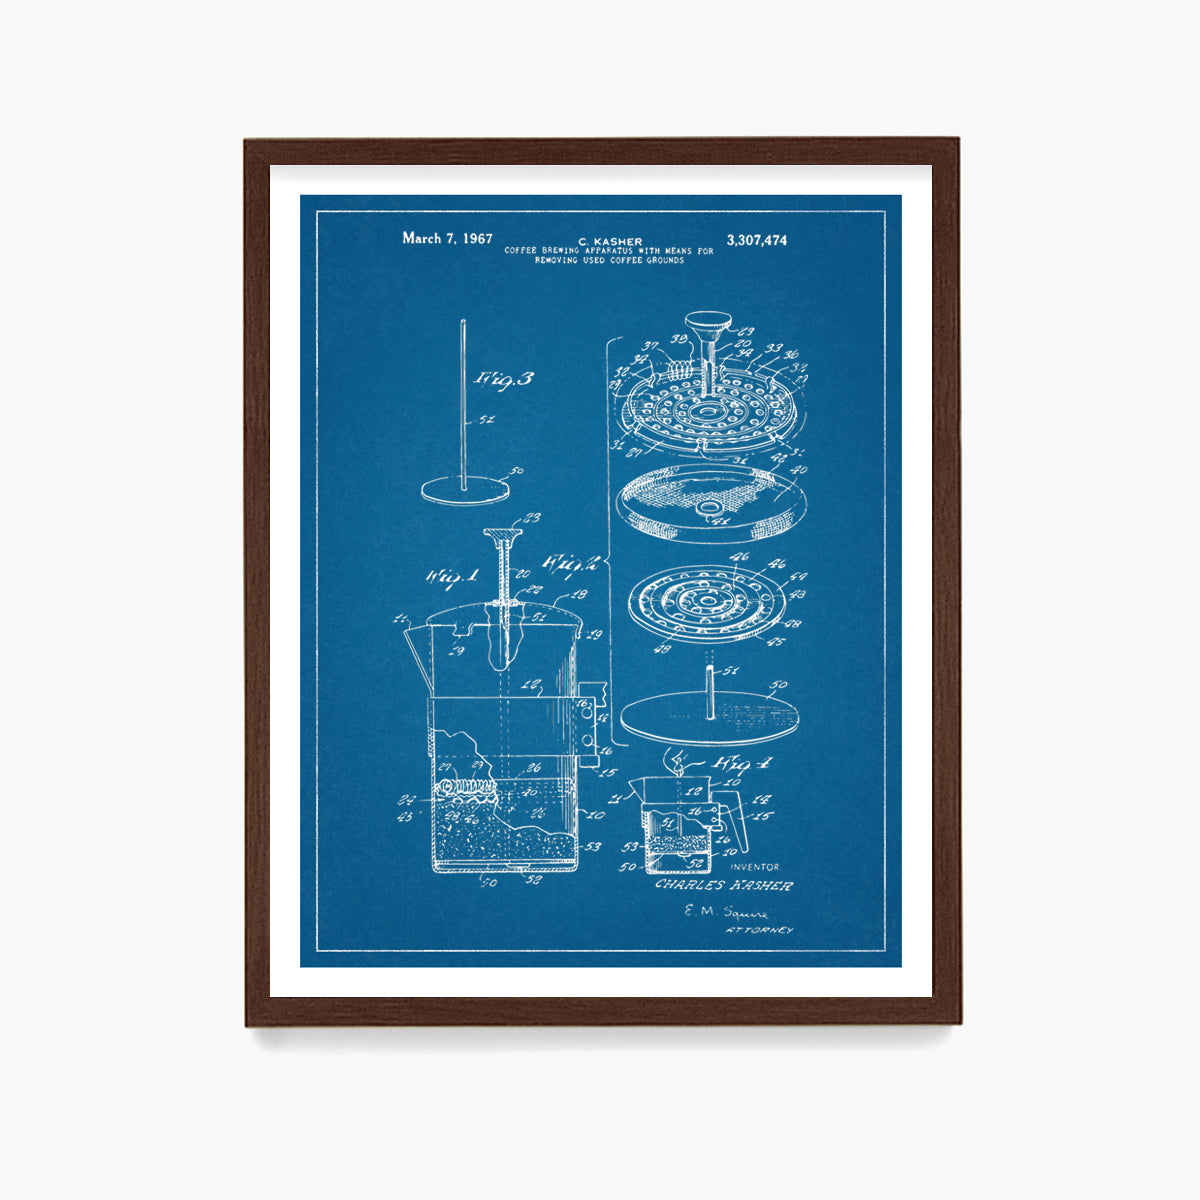 Coffee French Press Patent Poster, Kitchen Wall Art